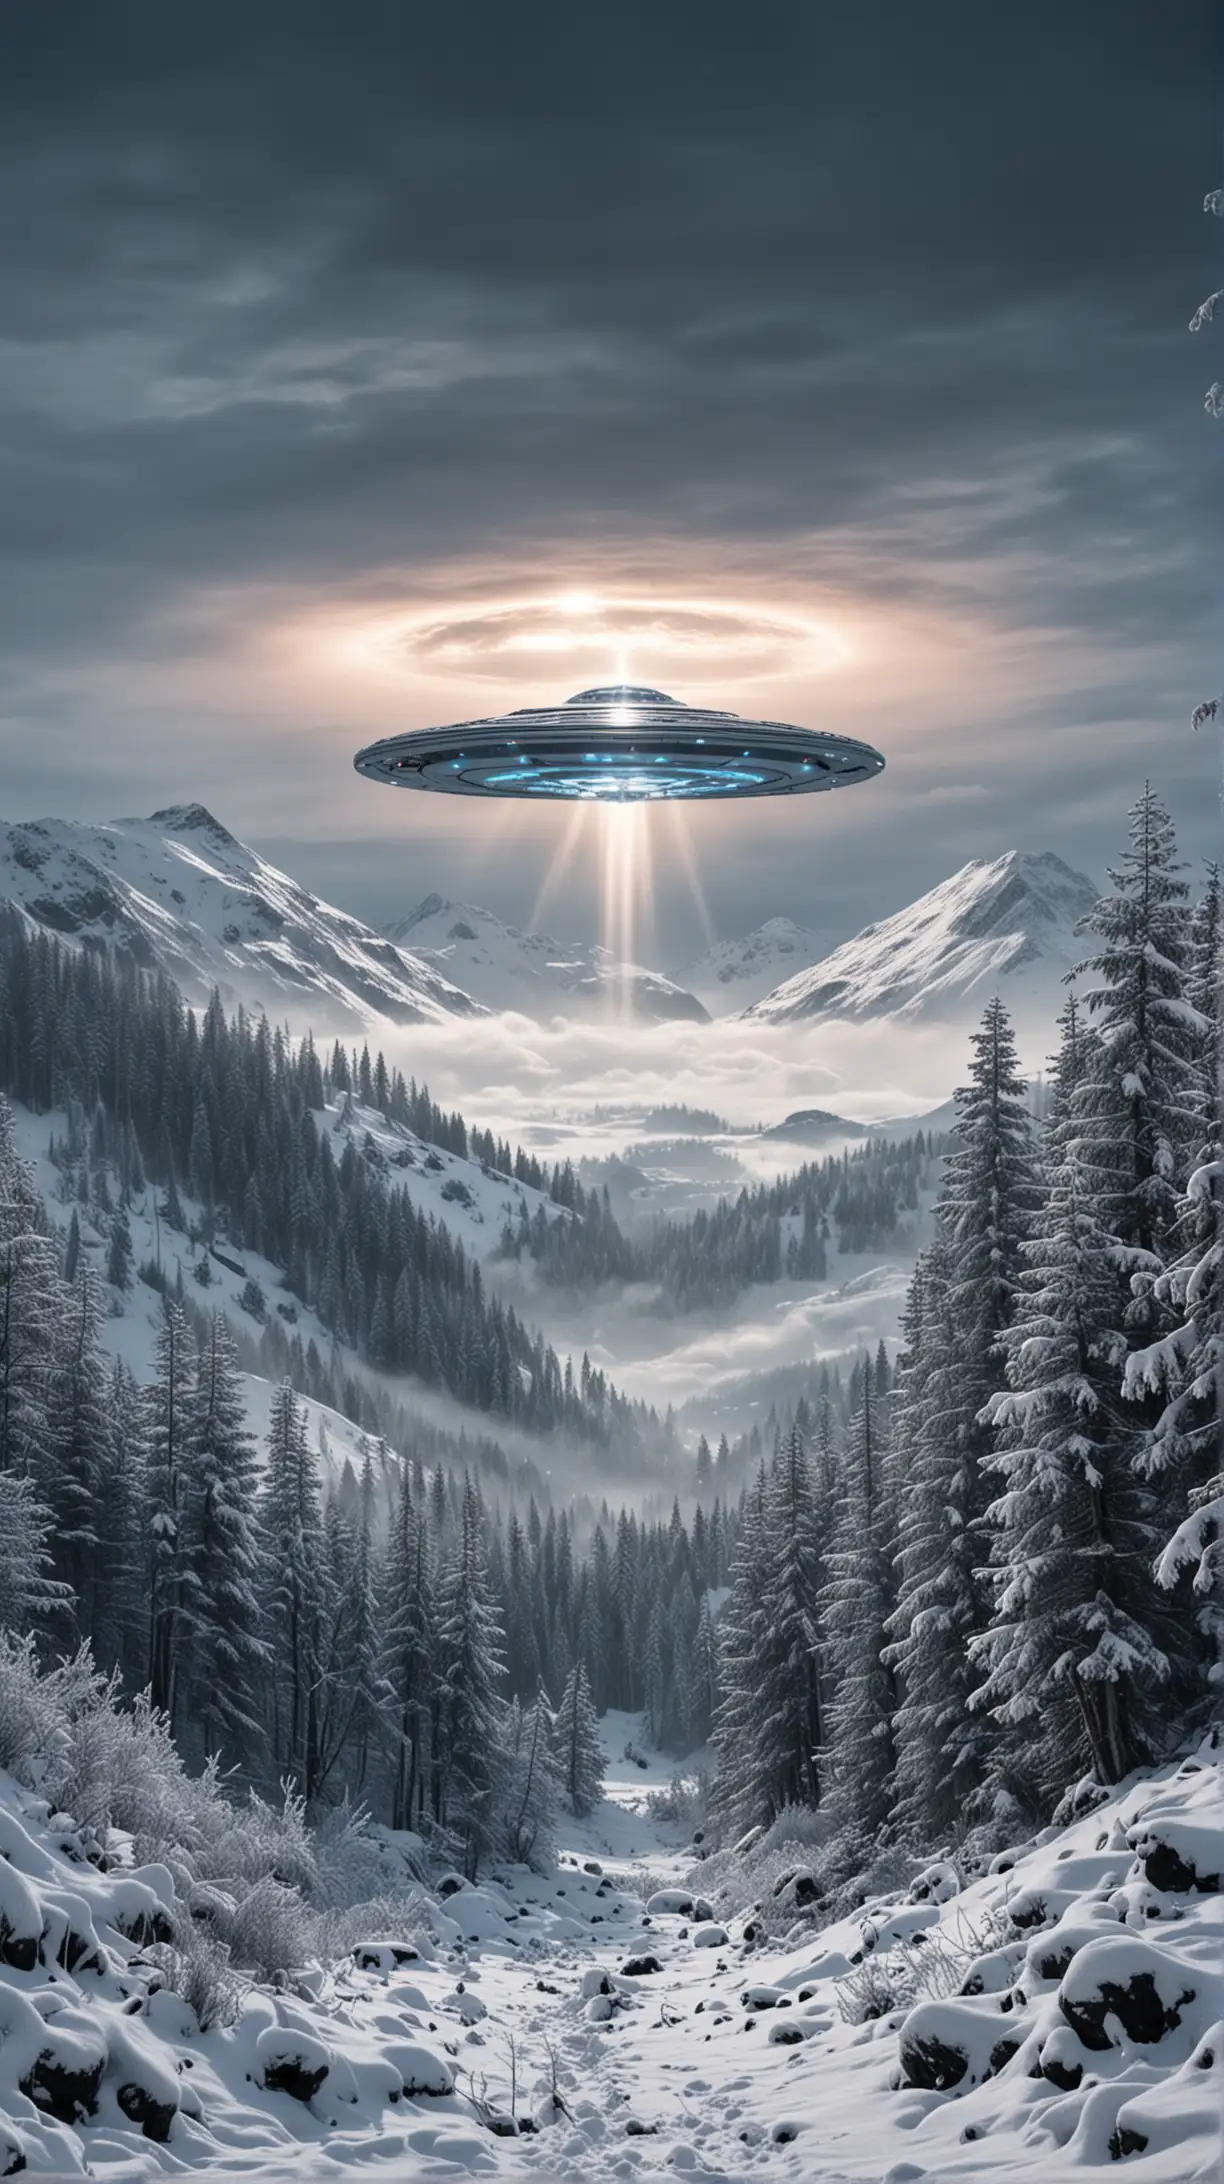 UFO Flying over Snowy Mountain Peaks